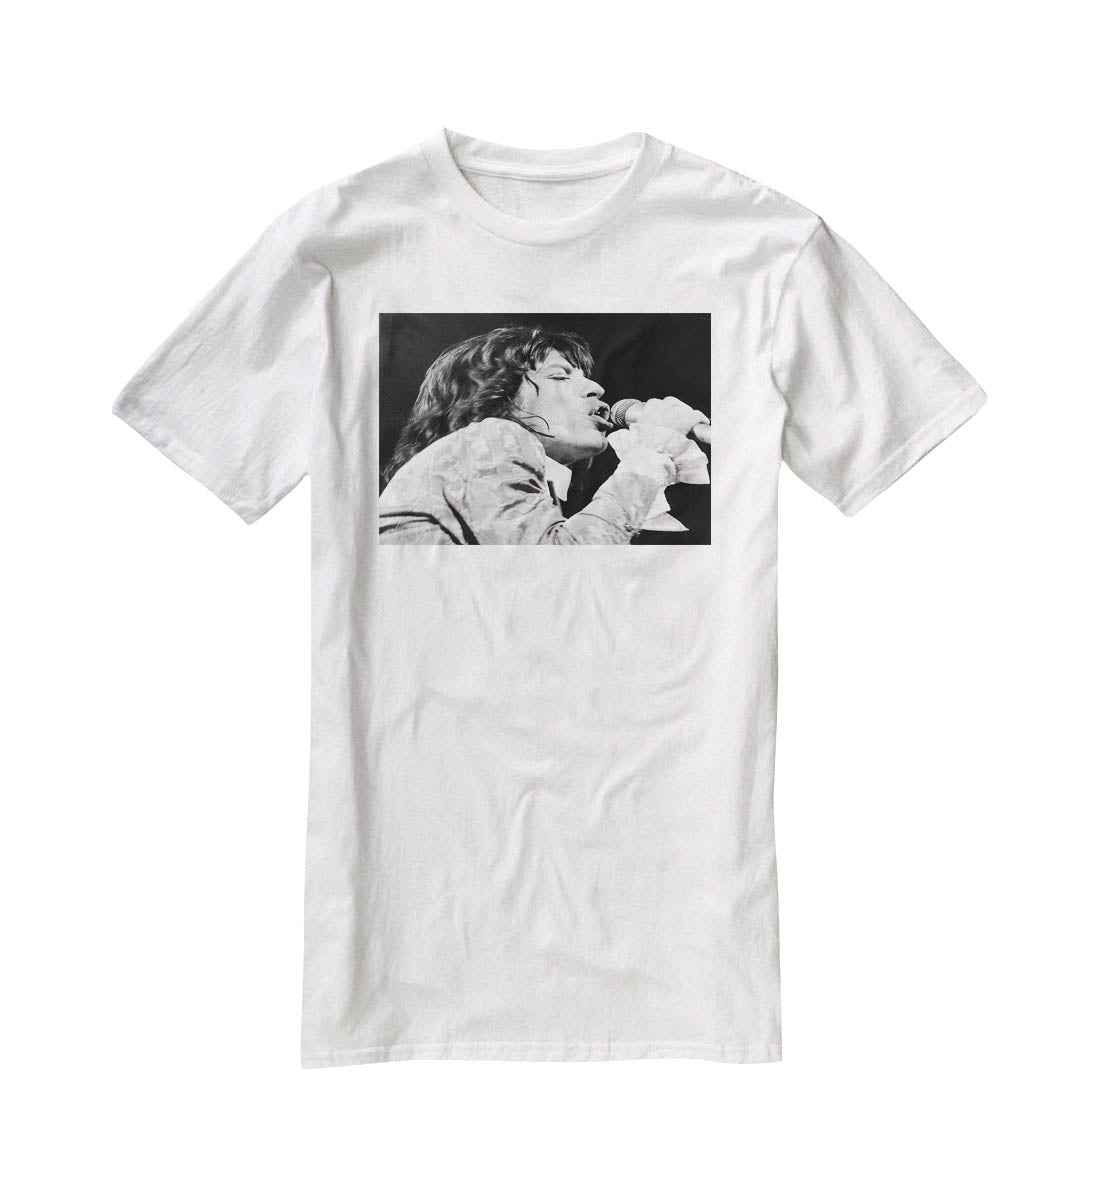 Mick Jagger belts it out T-Shirt - Canvas Art Rocks - 5